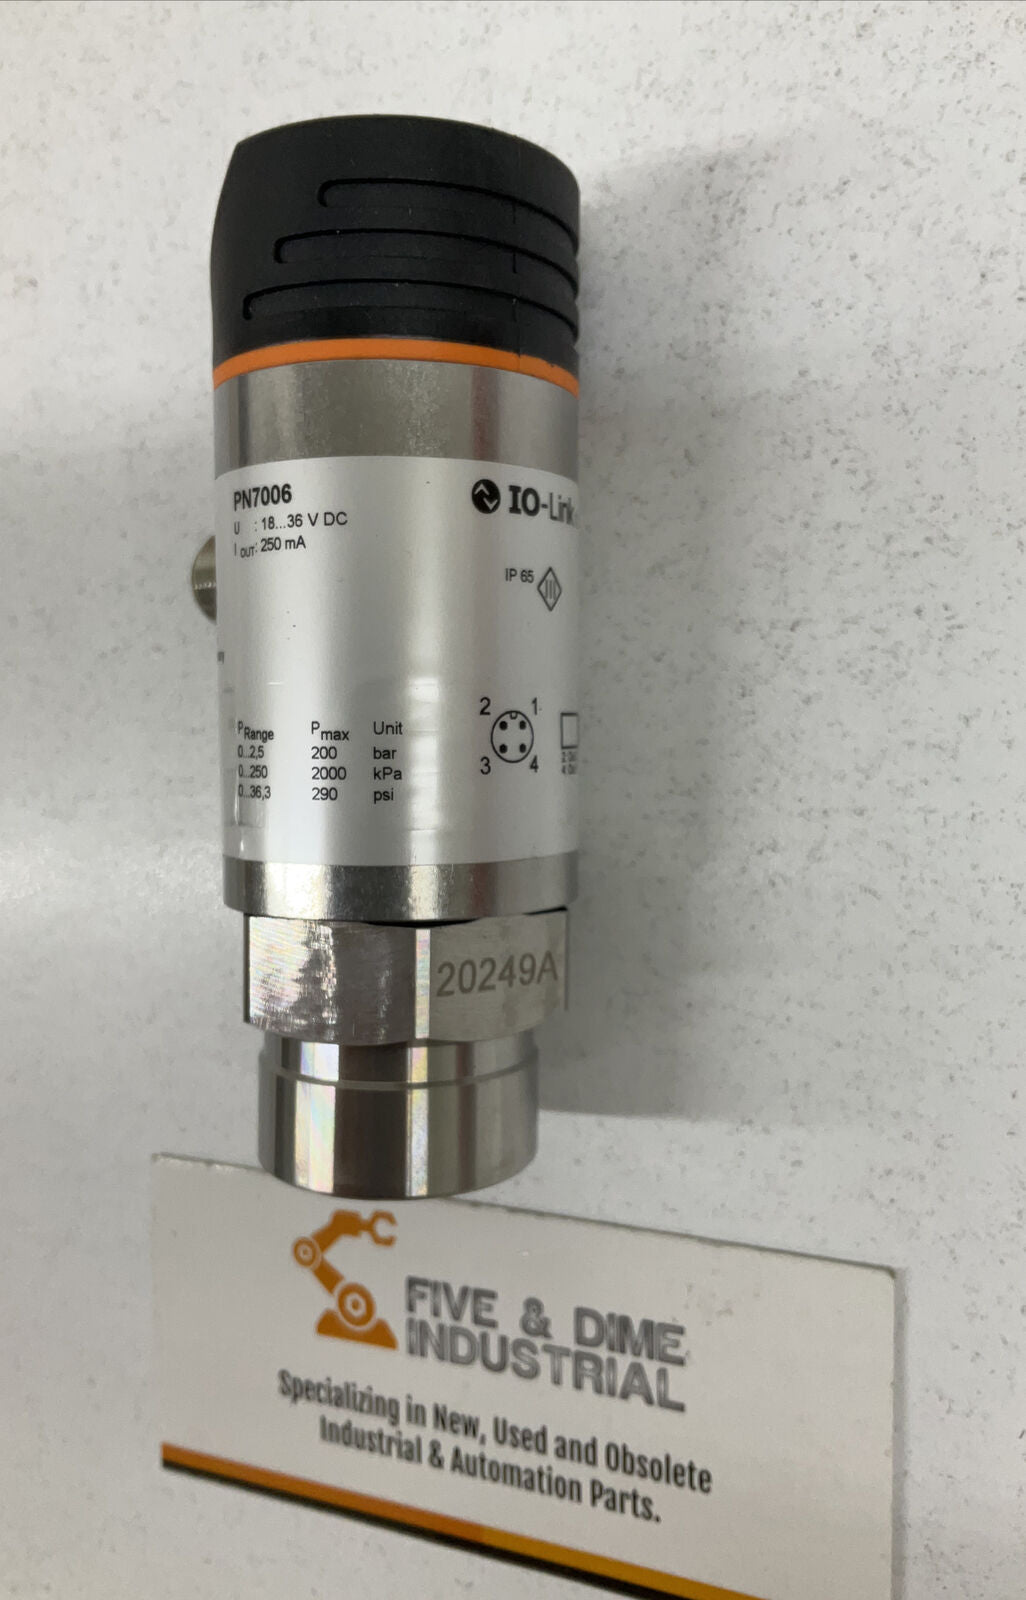 IFM PN7006 New Pressure Sensor G1/4 18-36VDC (GR147)